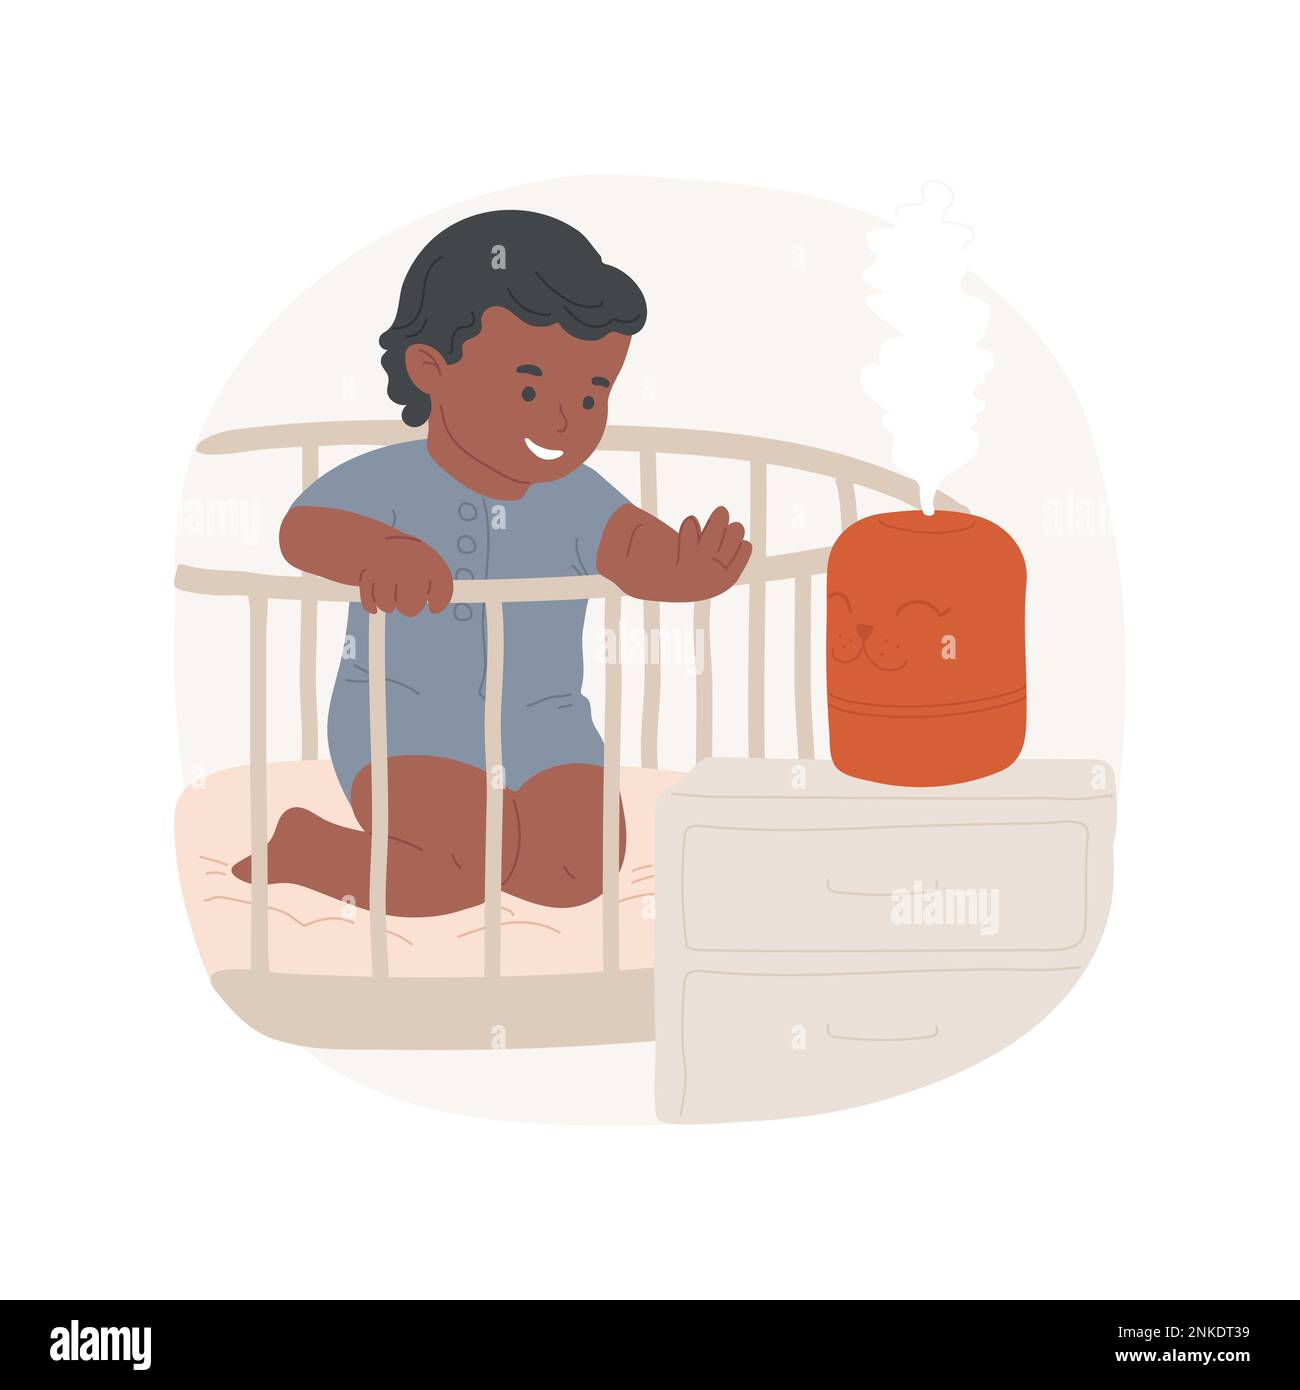 Humidifier isolated cartoon vector illustration. Little baby looks at nighttime humidifier, healthy moisture in the room, kids bedtime, sleep hygiene, happy childhood, nursery vector cartoon. Stock Vector